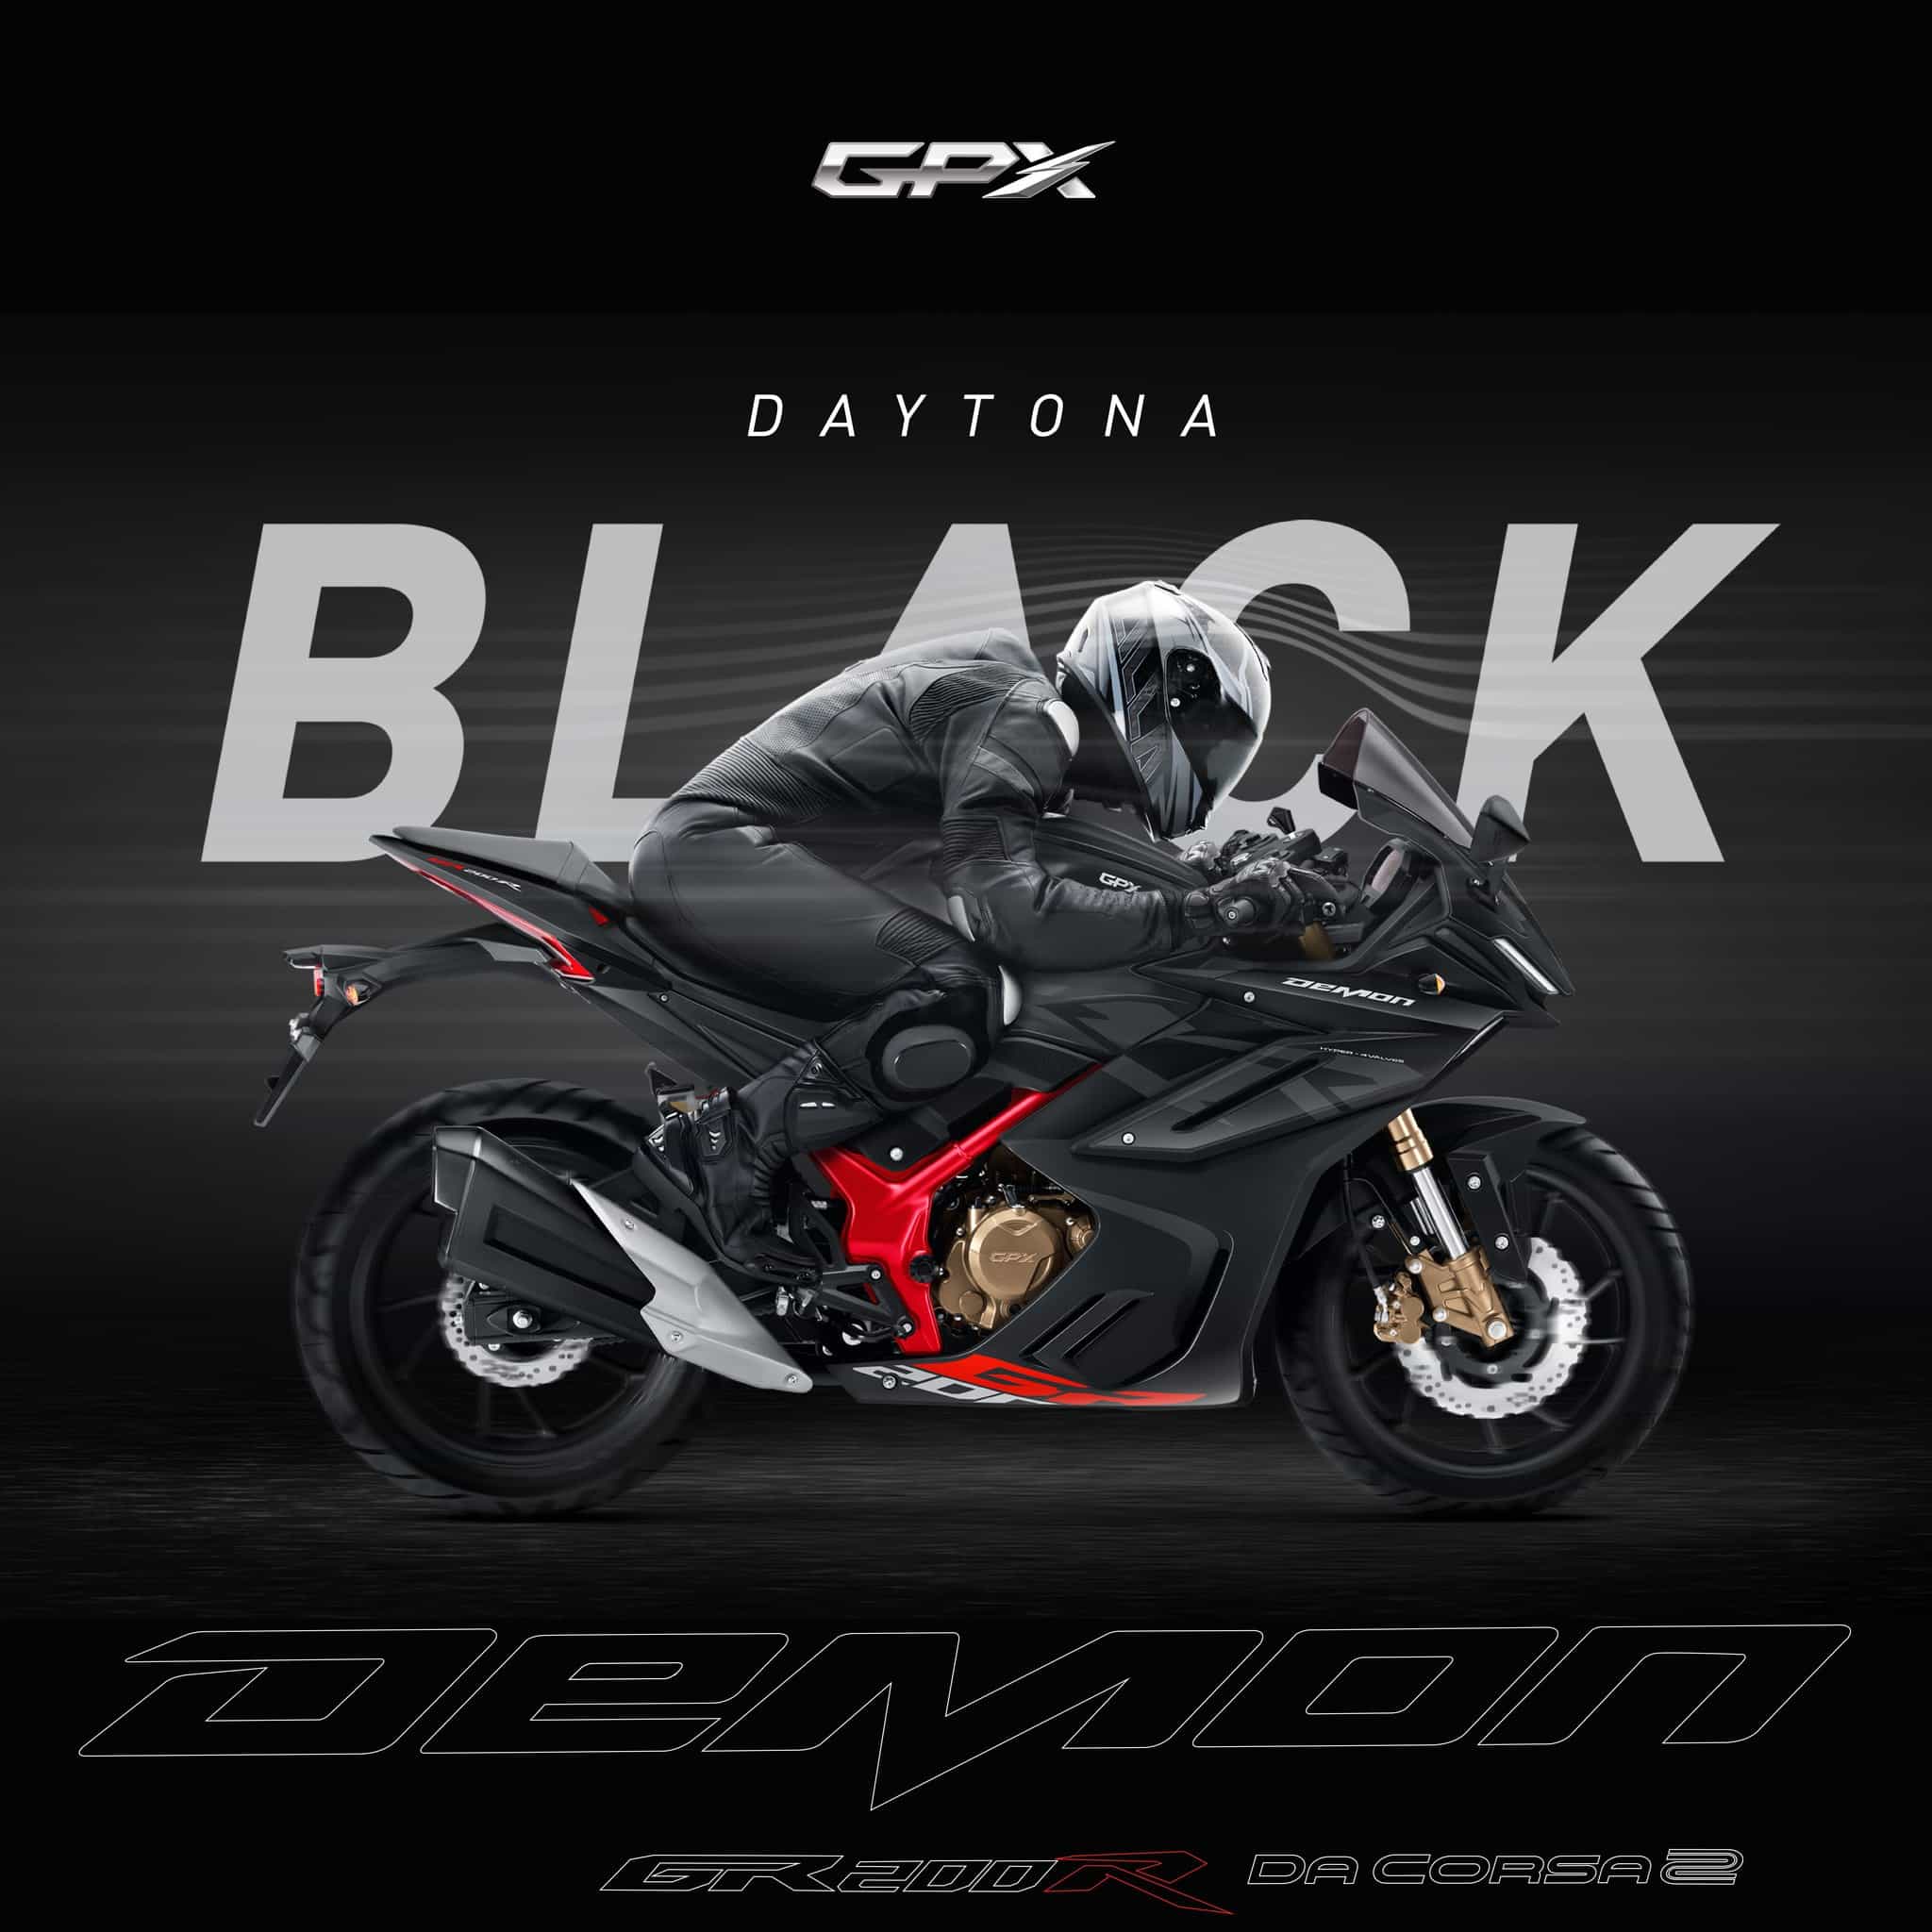 GPX Demon GR200R Da Corsa 2 Makes Official Debut - Price Revealed! - snap